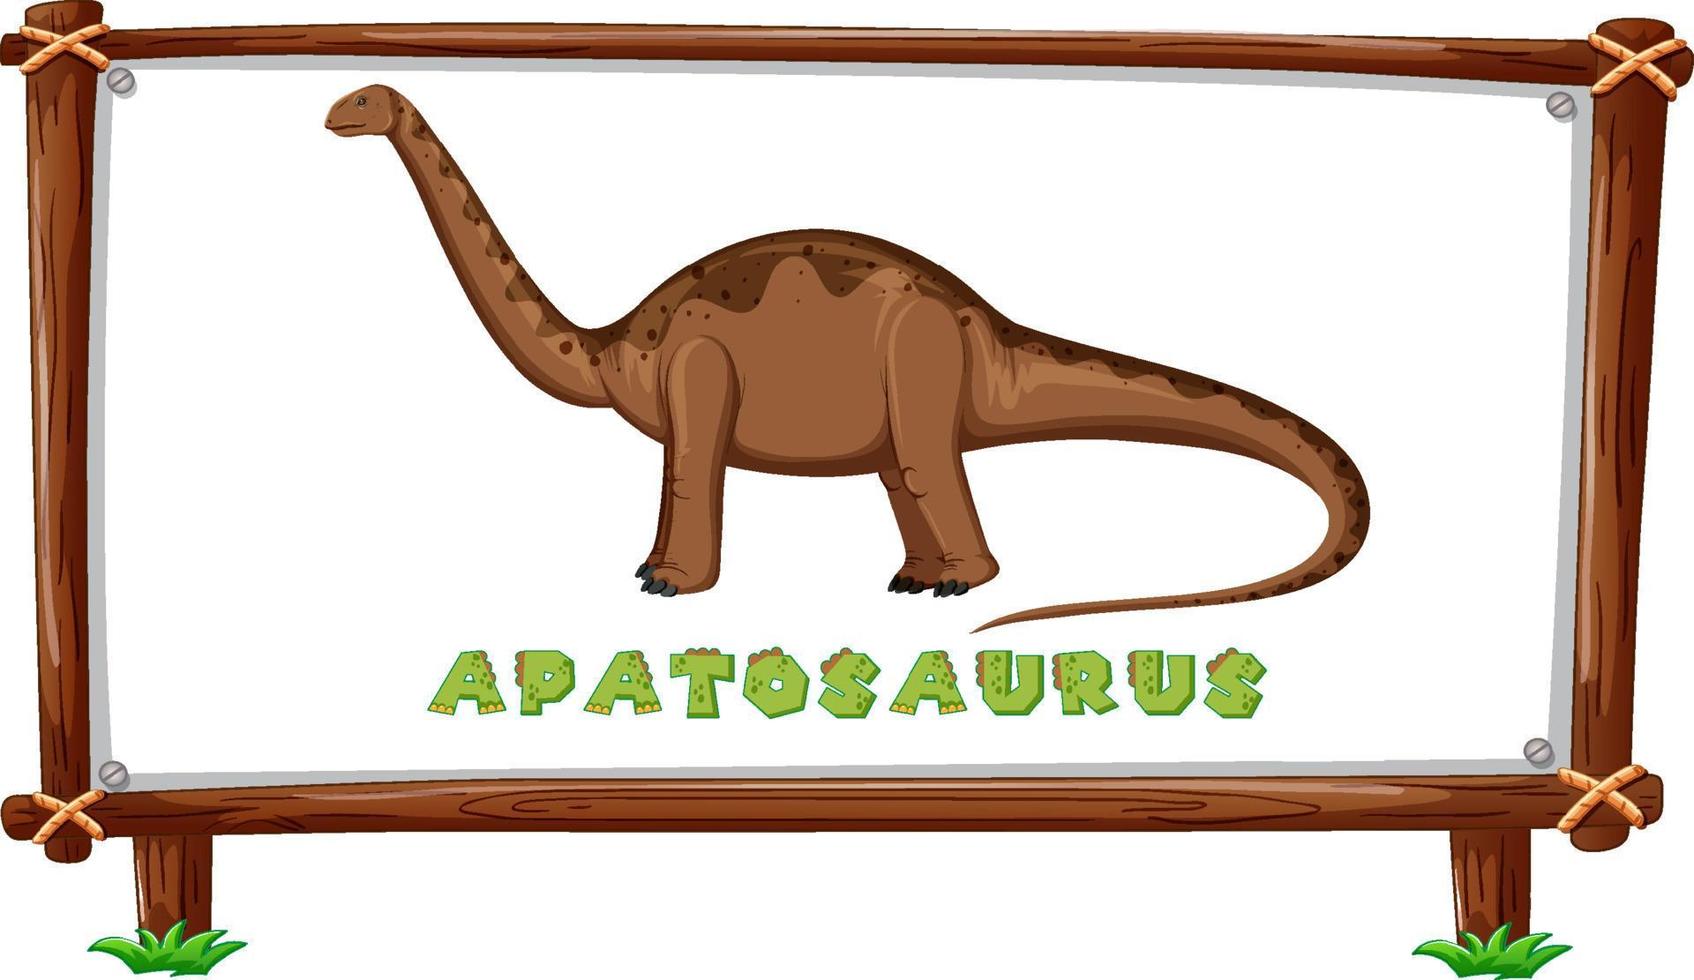 plantilla de marco con dinosaurios y diseño de apatosaurio de texto dentro vector